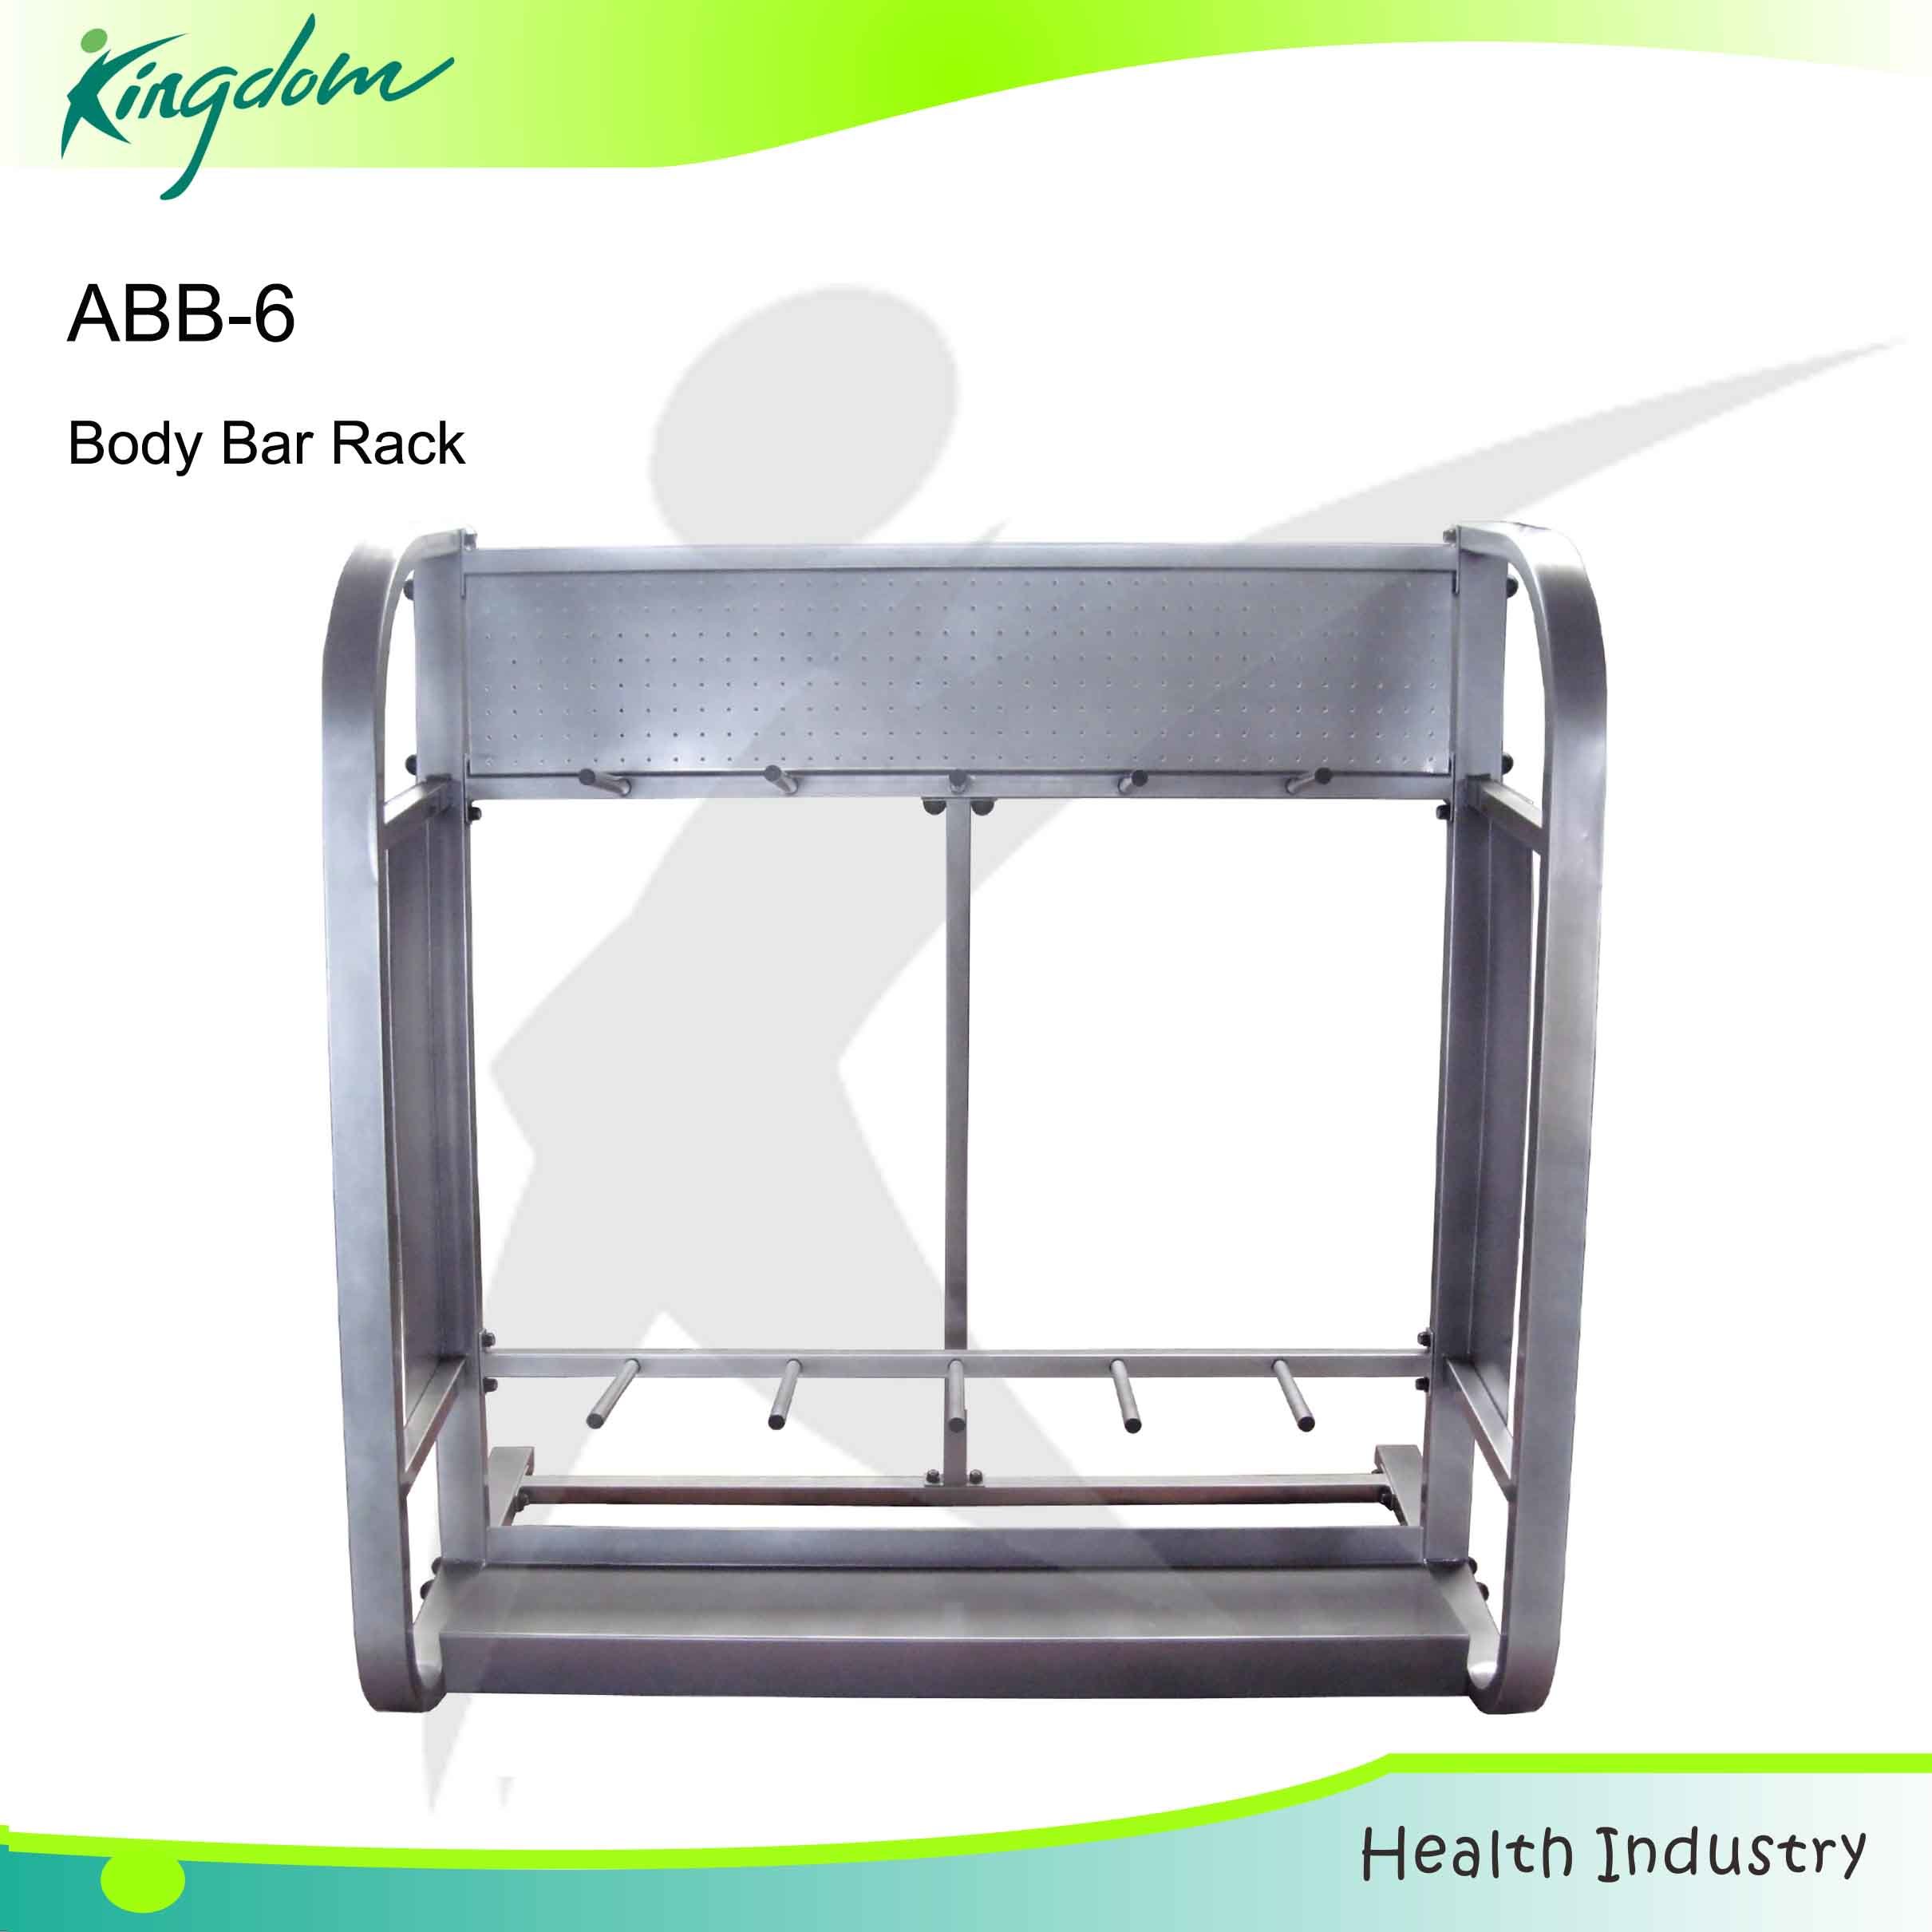 Body Building/Bar Rack/Body Bar Rack/Gym Fitness Power Bar Rack (ABB-6)